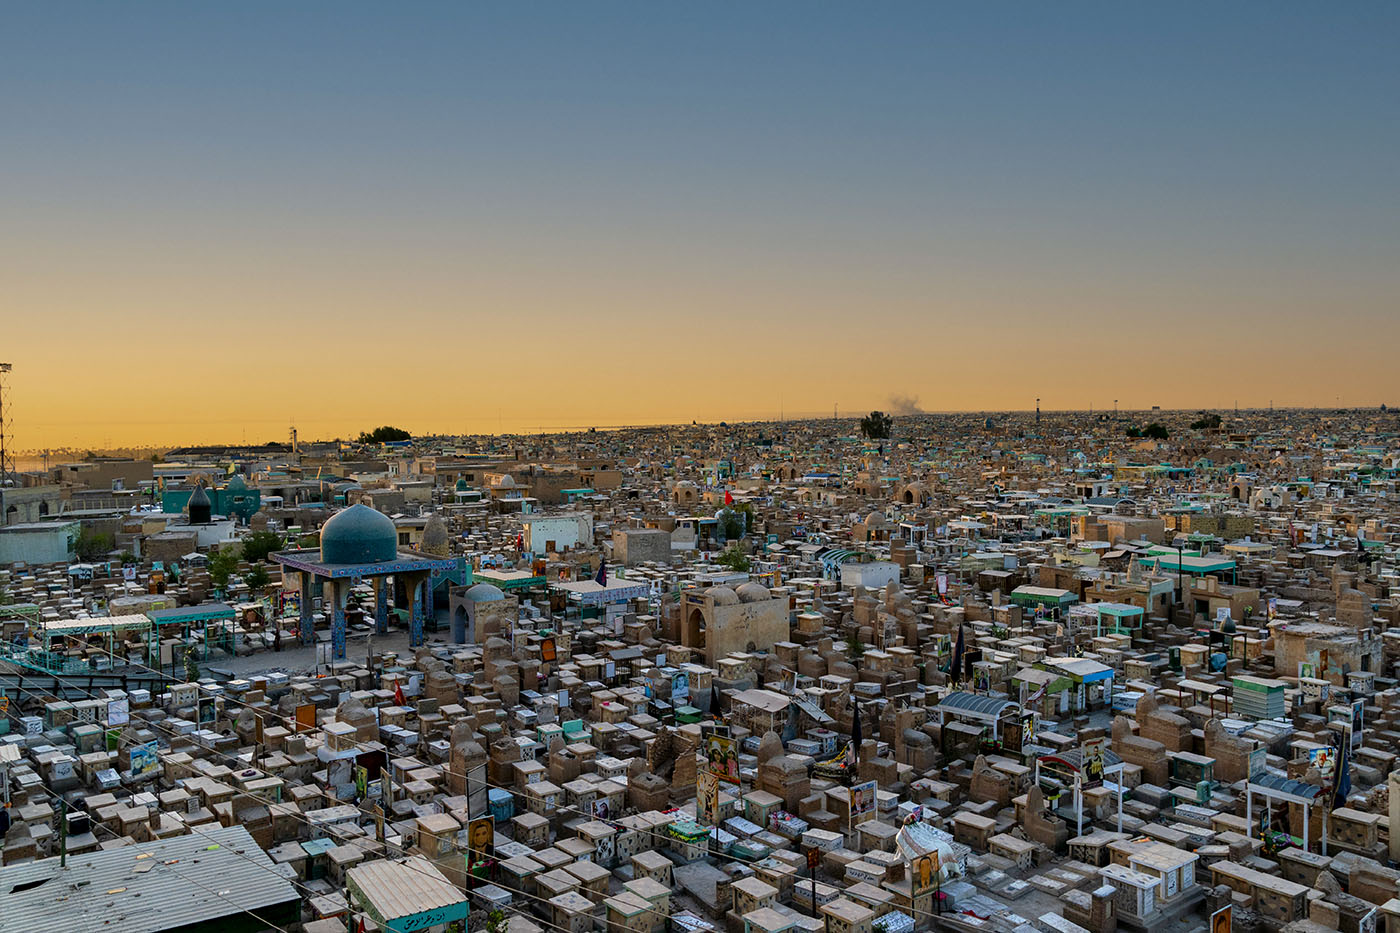 The world’s largest cemetery, Najaf, Iraq.